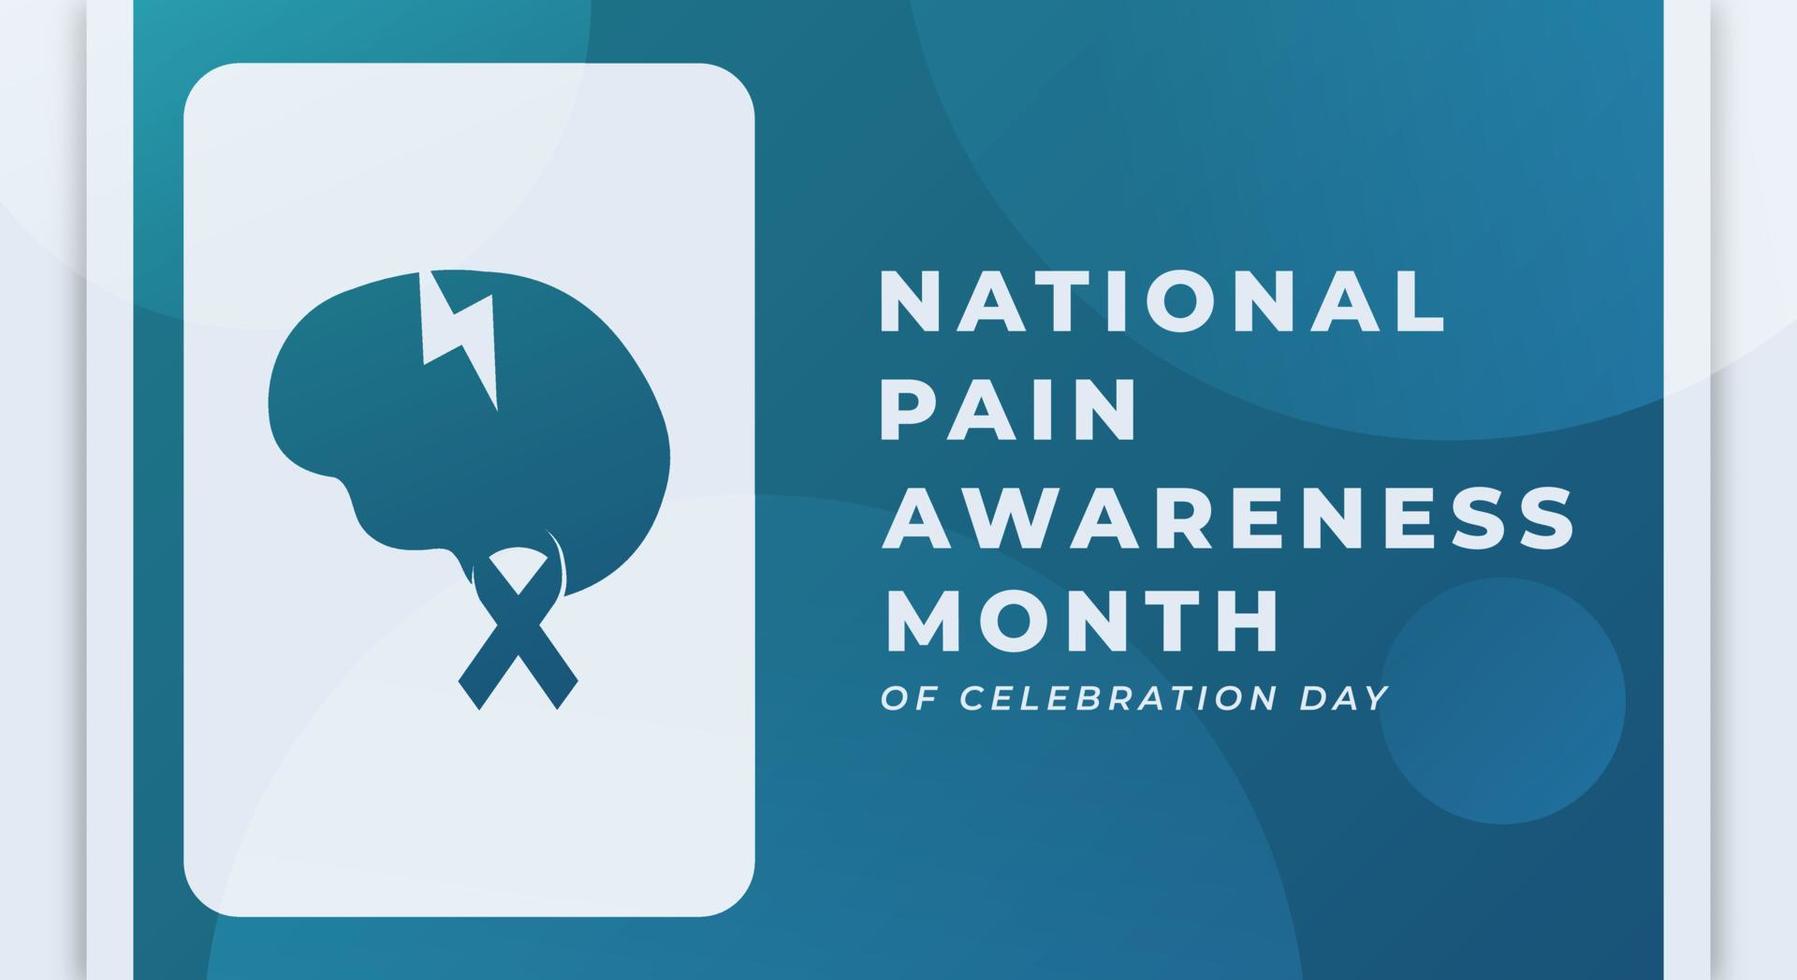 Happy Pain Awareness Month Celebration Vector Design Illustration for Background, Poster, Banner, Advertising, Greeting Card